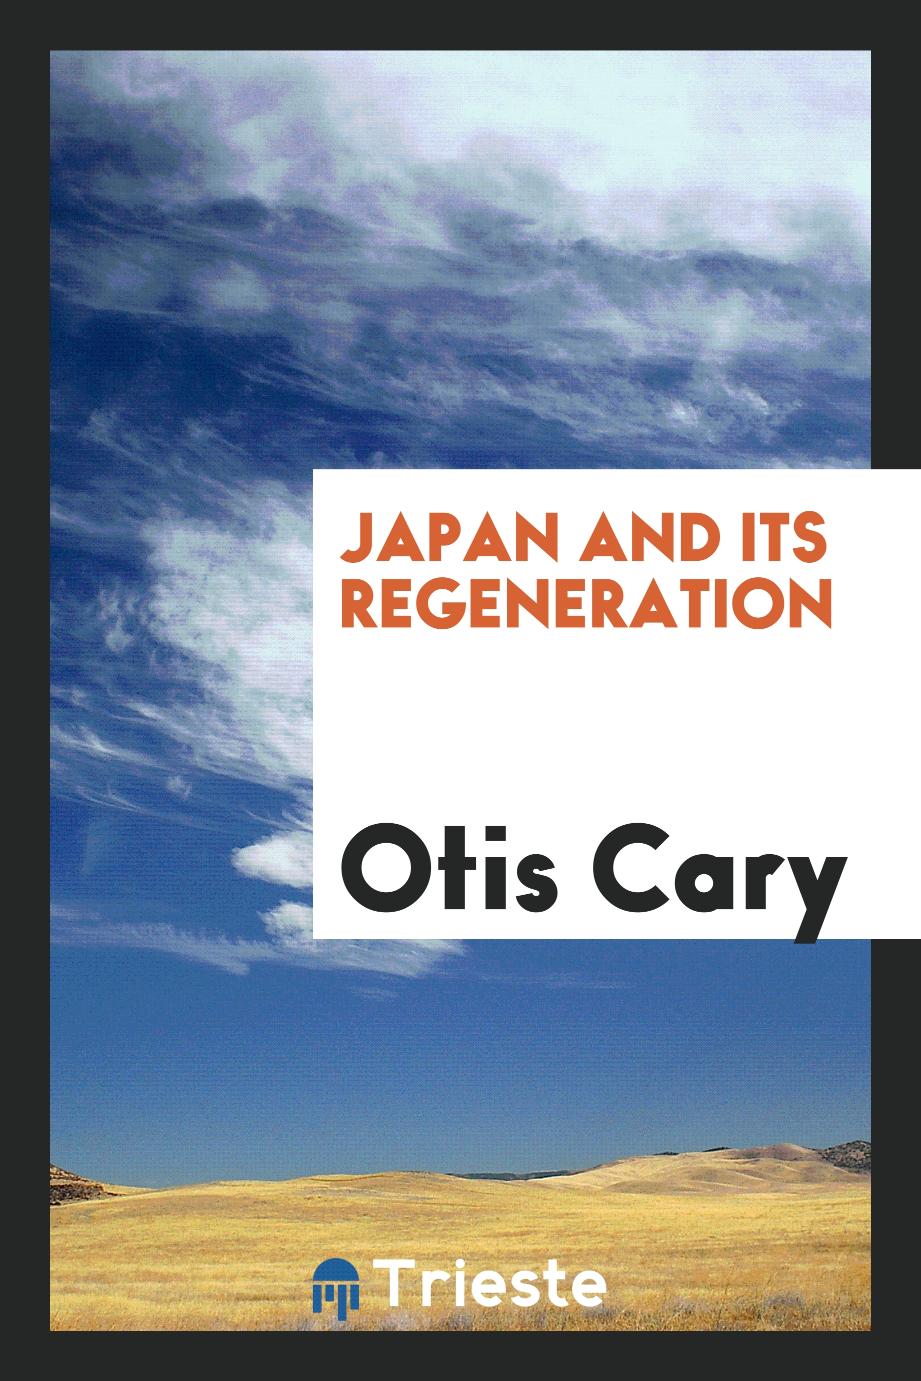 Japan and Its Regeneration